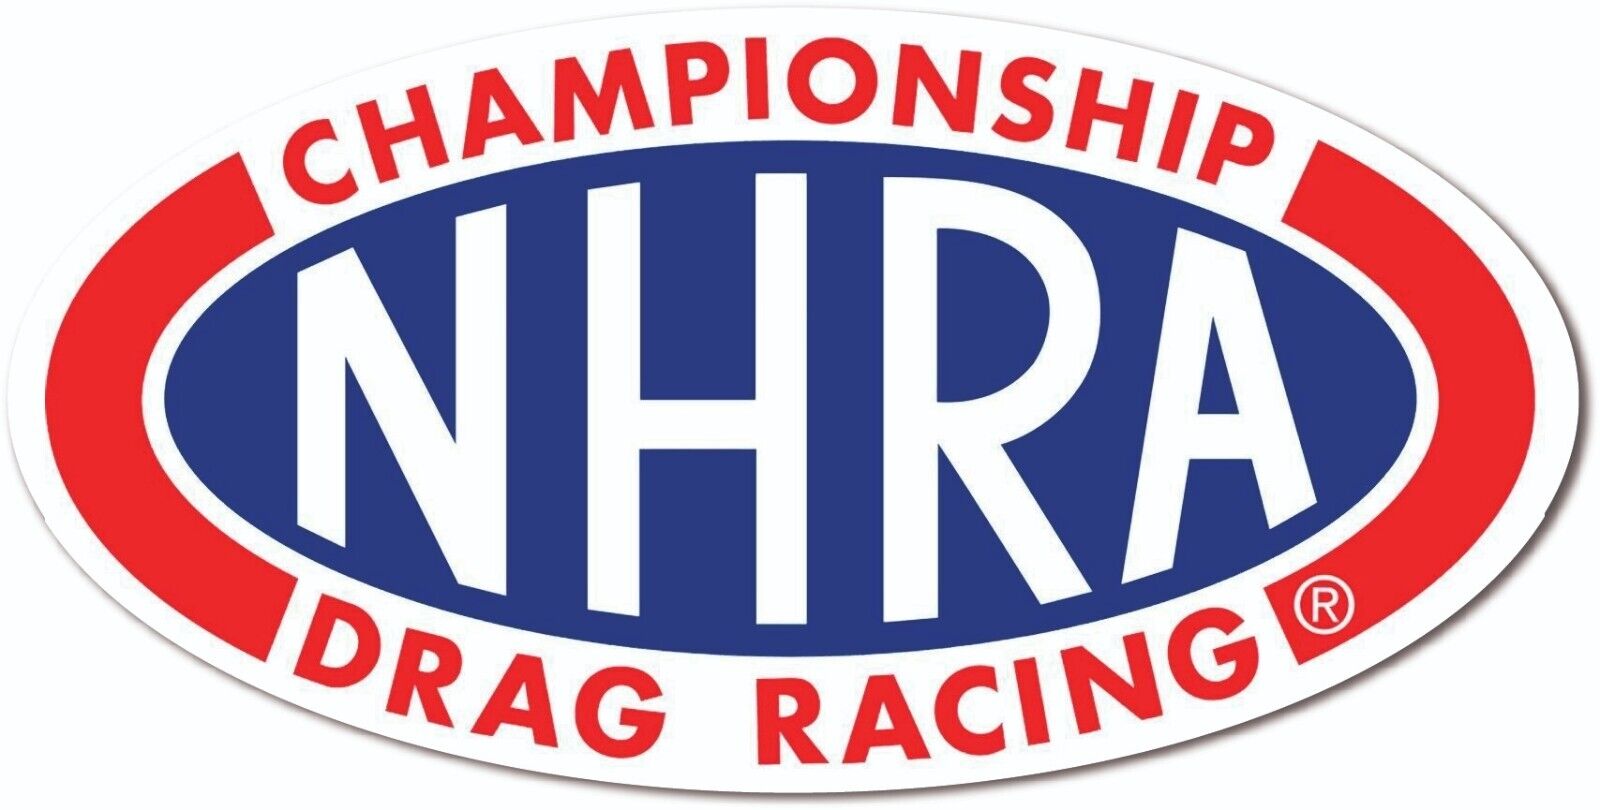 NHRA CHAMPIONSHIP DRAG RACING DECAL STICKER USA TRUCK VEHICLE WINDOW WALL CAR